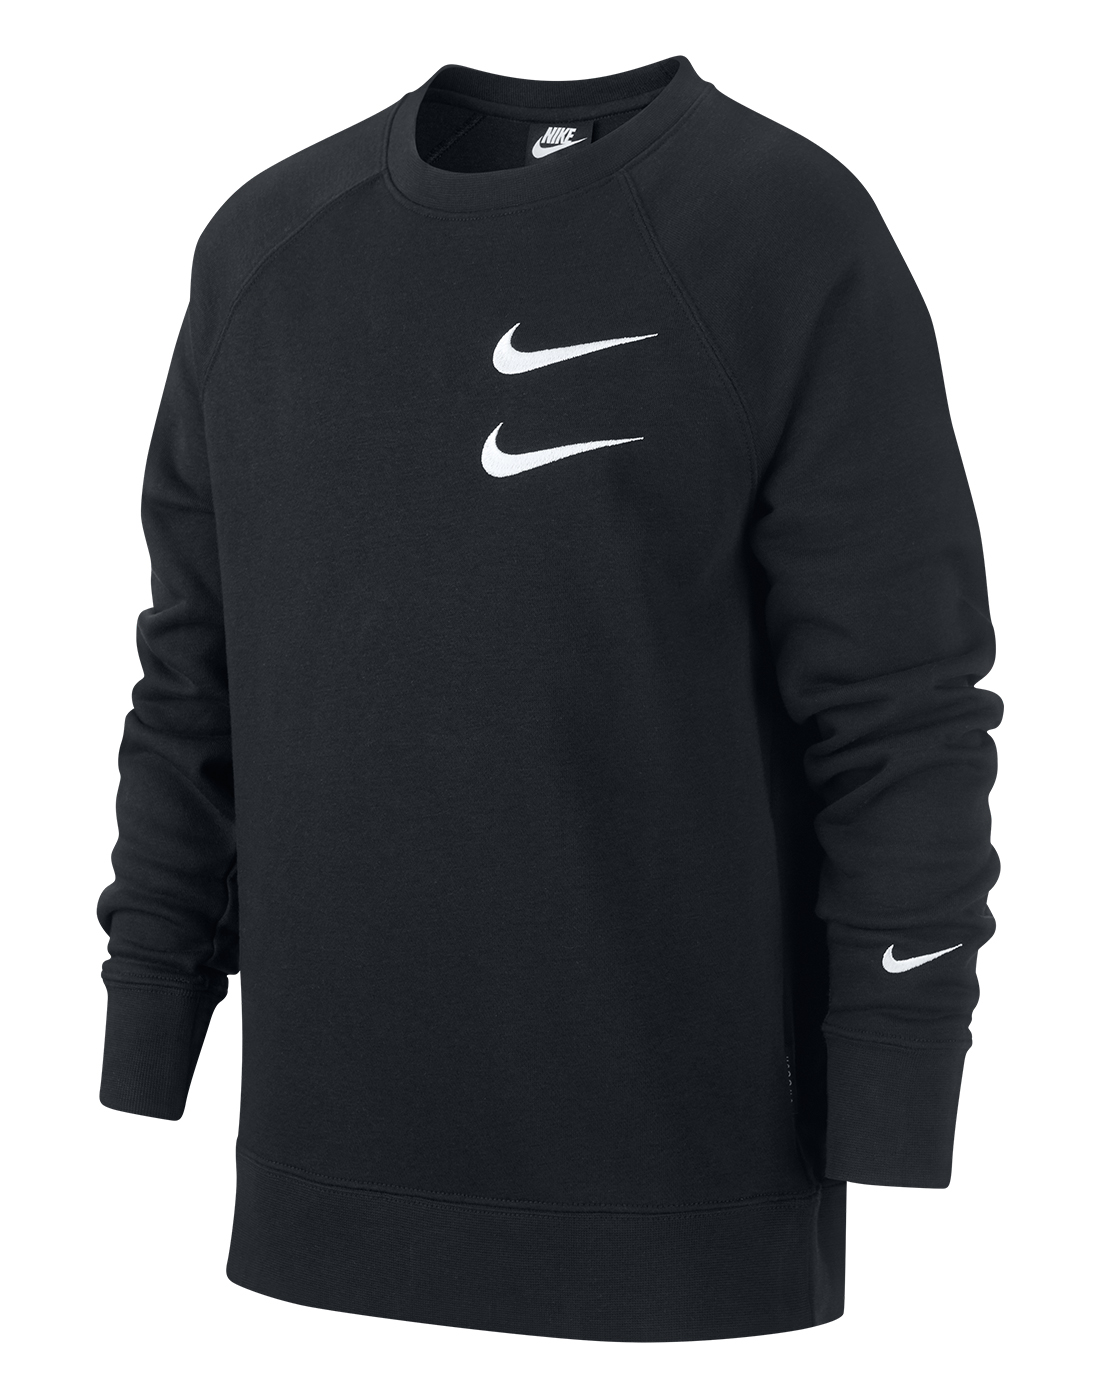 Nike Older Boys Swoosh Crew Neck Sweatshirt - Black | Life Style Sports IE